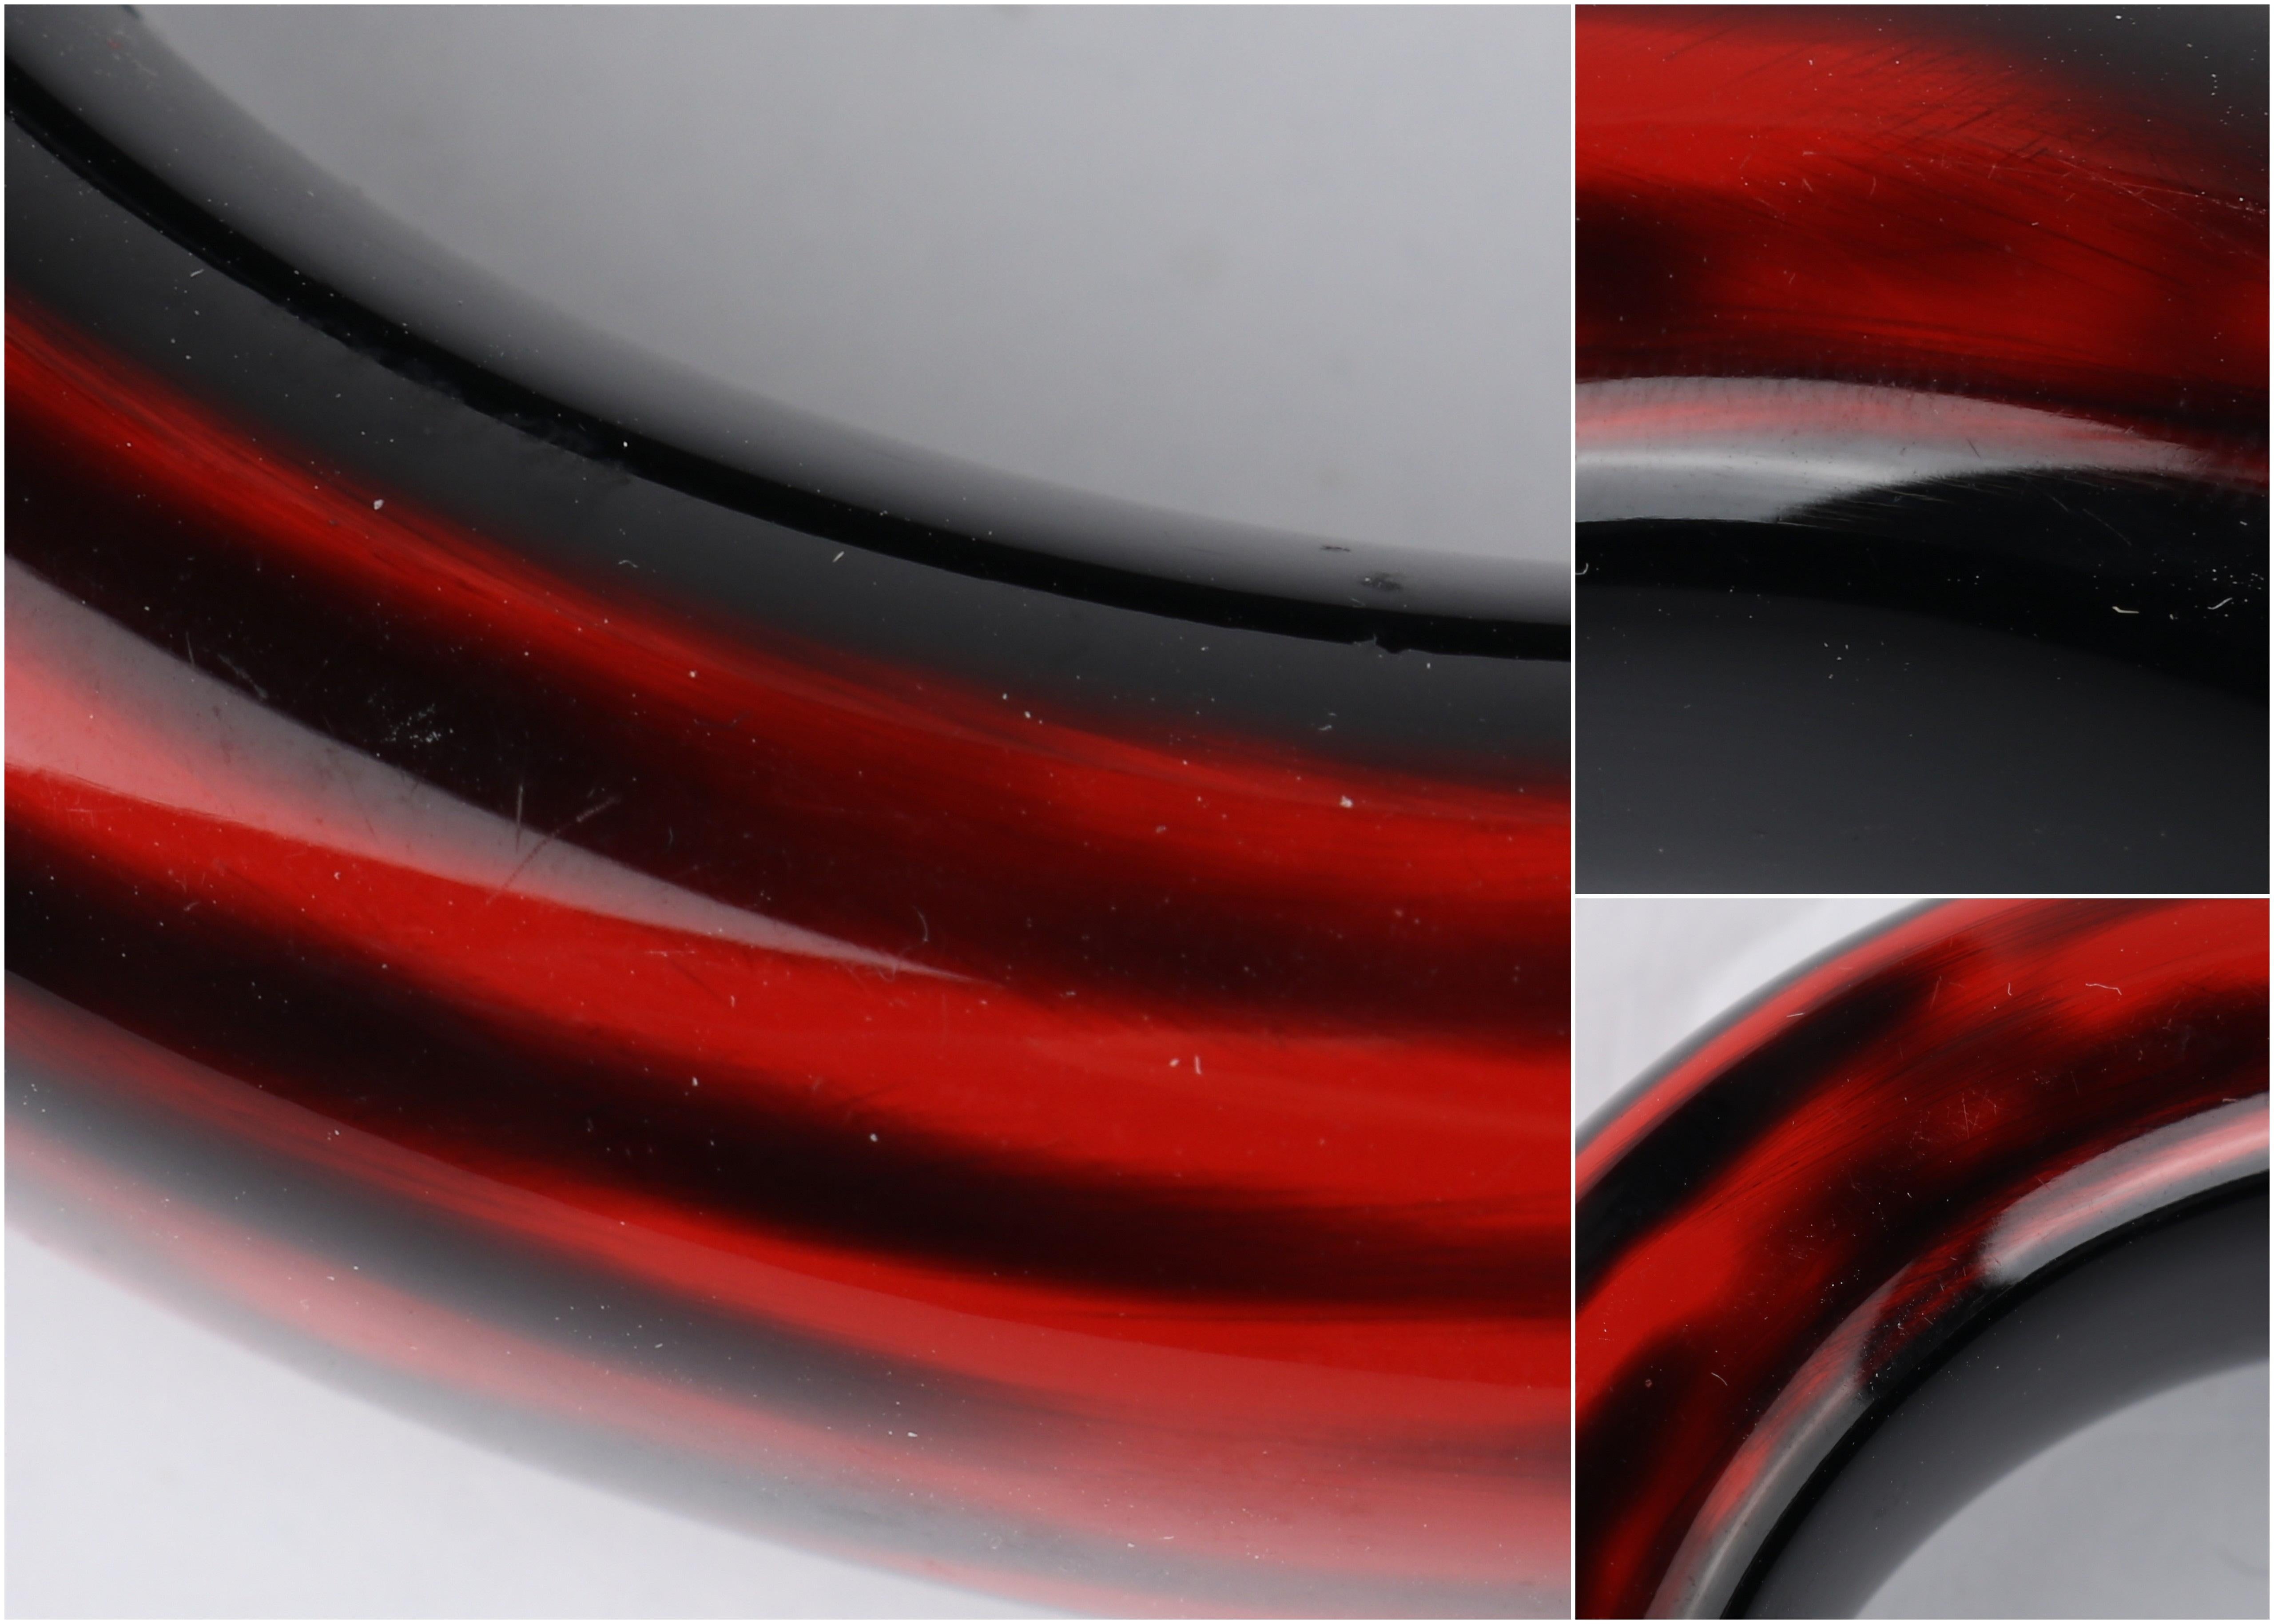 TIFFANY & CO. ELSA PERETTI Armreif aus Hartholz mit schwarzem und rotem poliertem Lack im Angebot 7